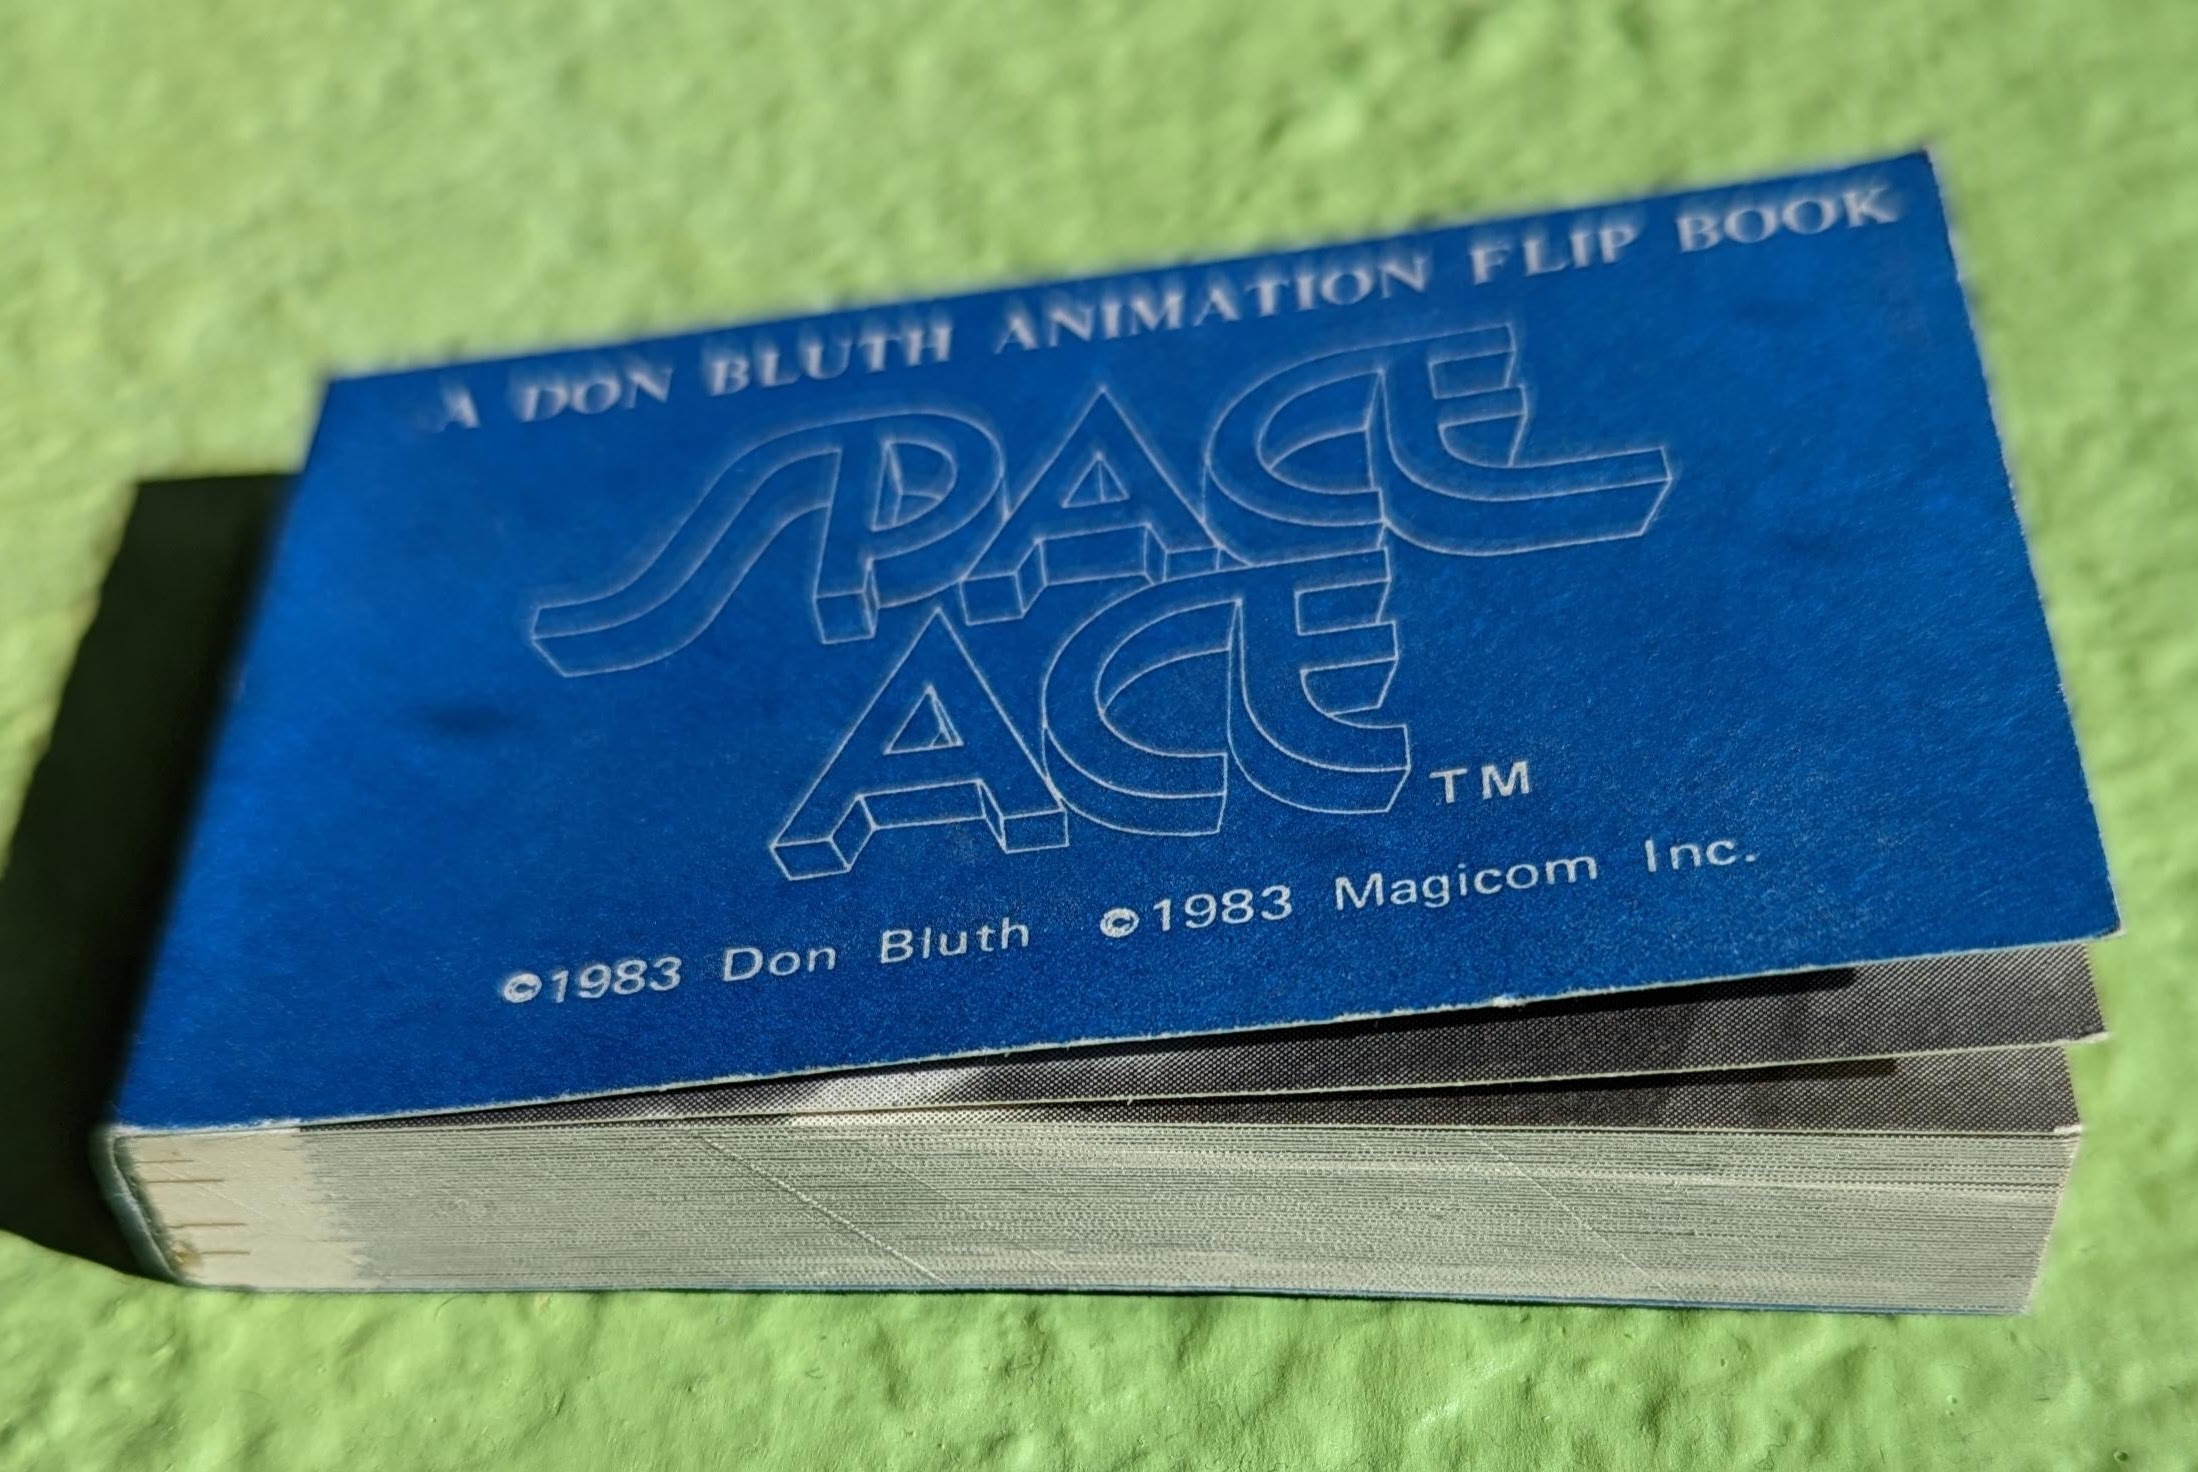 Space Ace Flip Book - Blue